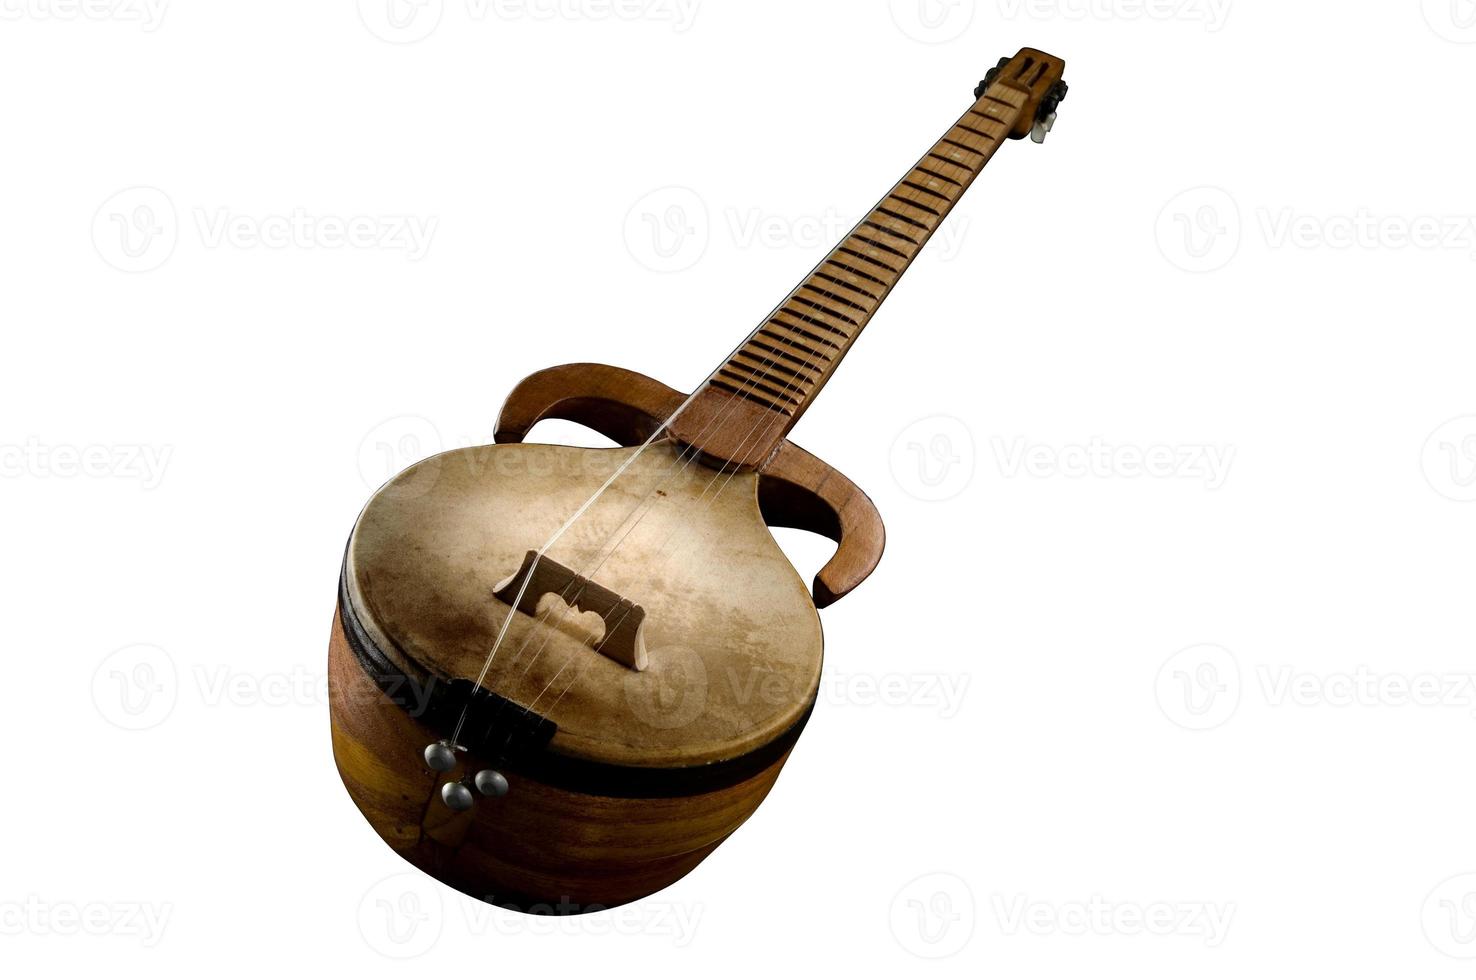 un antico asiatico a corda musicale strumento su un' bianca sfondo foto